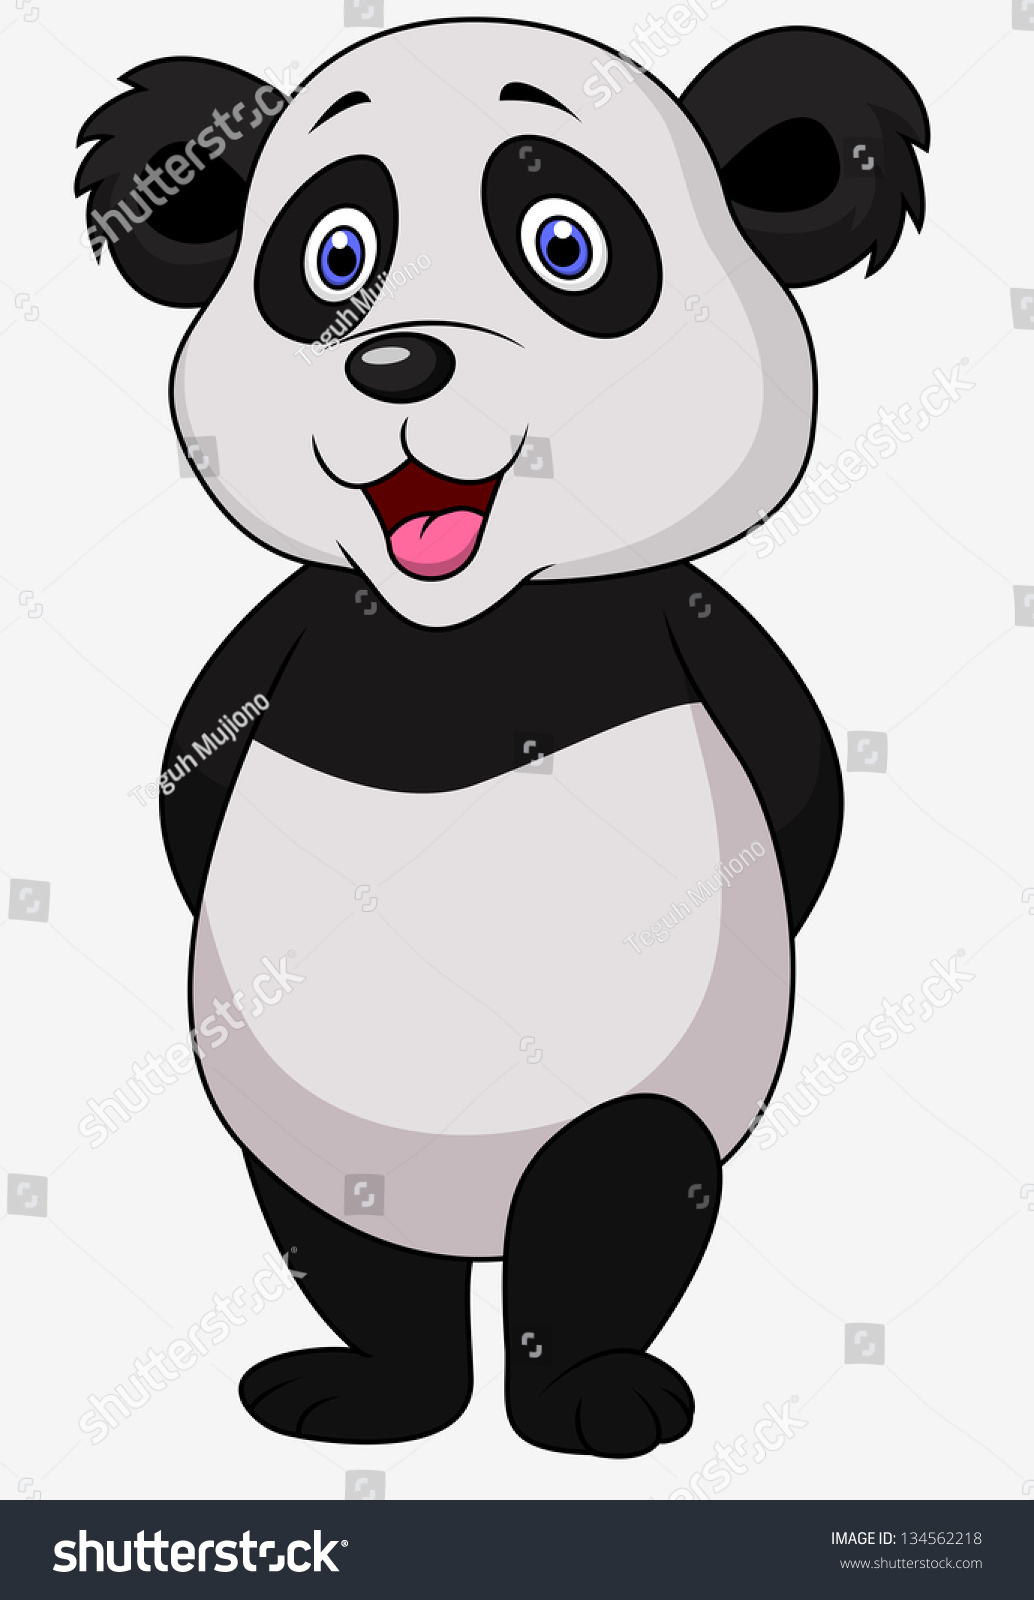 Cute Panda Cartoon Stock Photo 134562218 : Shutterstock